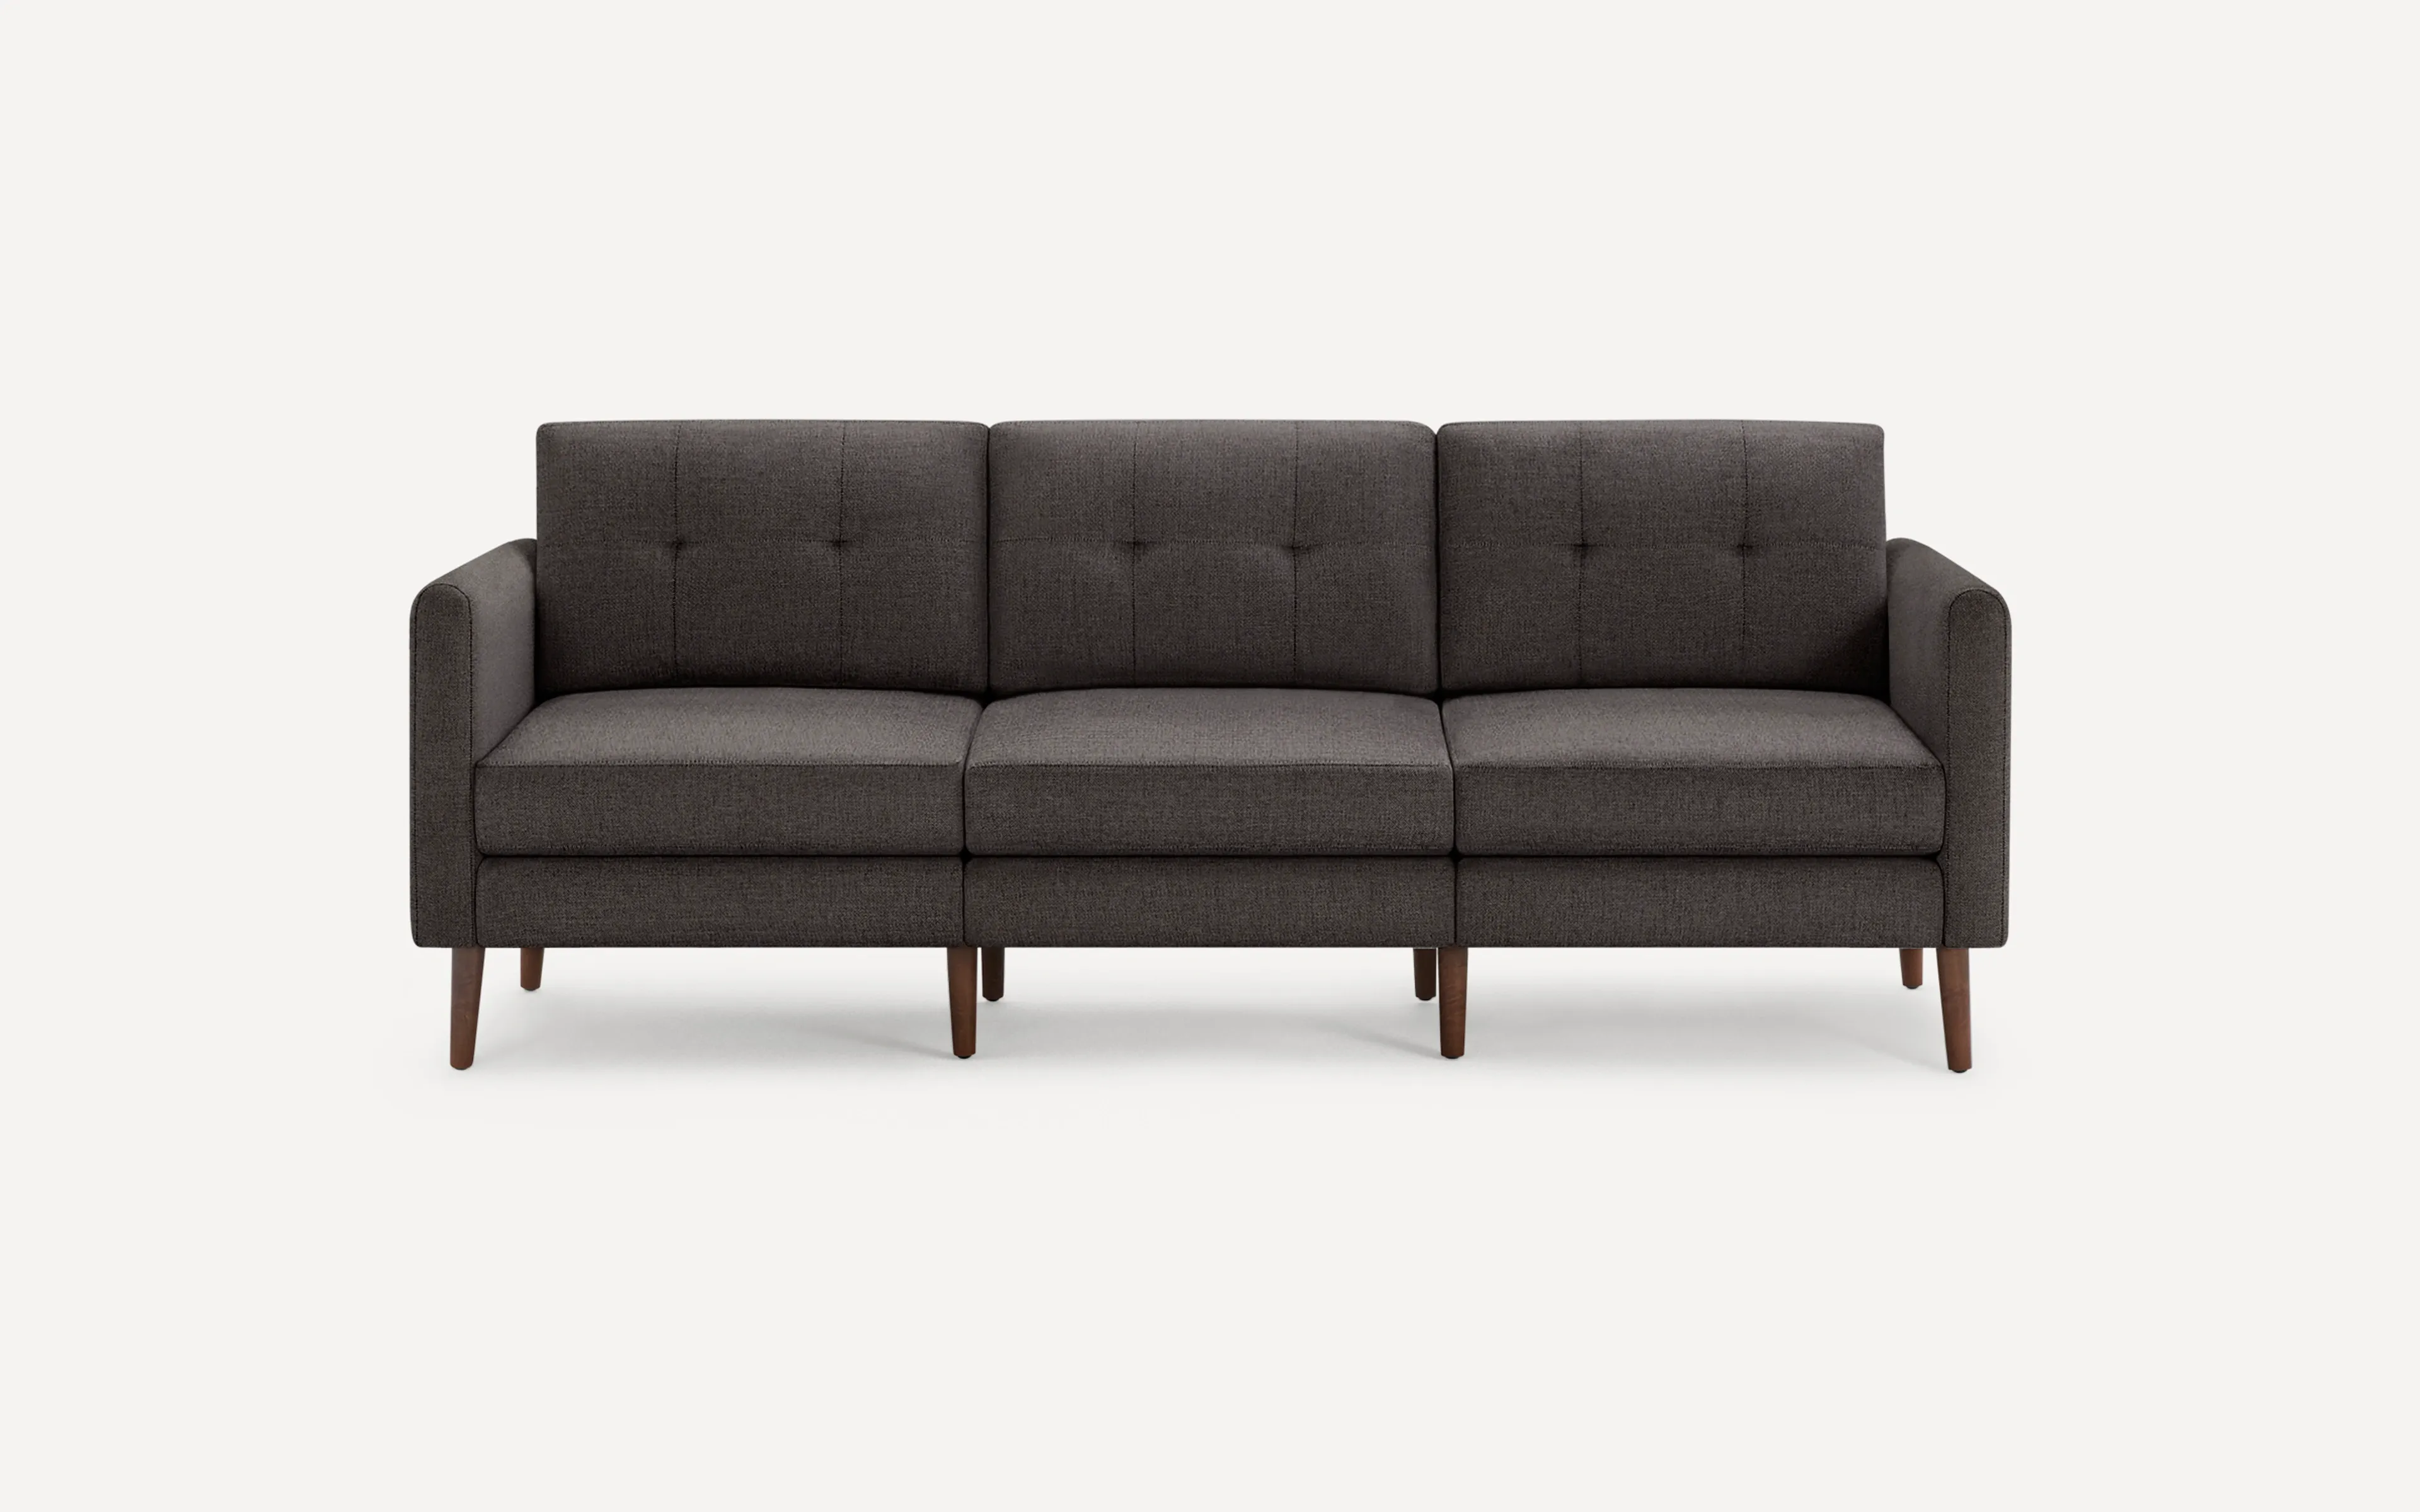 Original Nomad Sofa in Charcoal Fabric